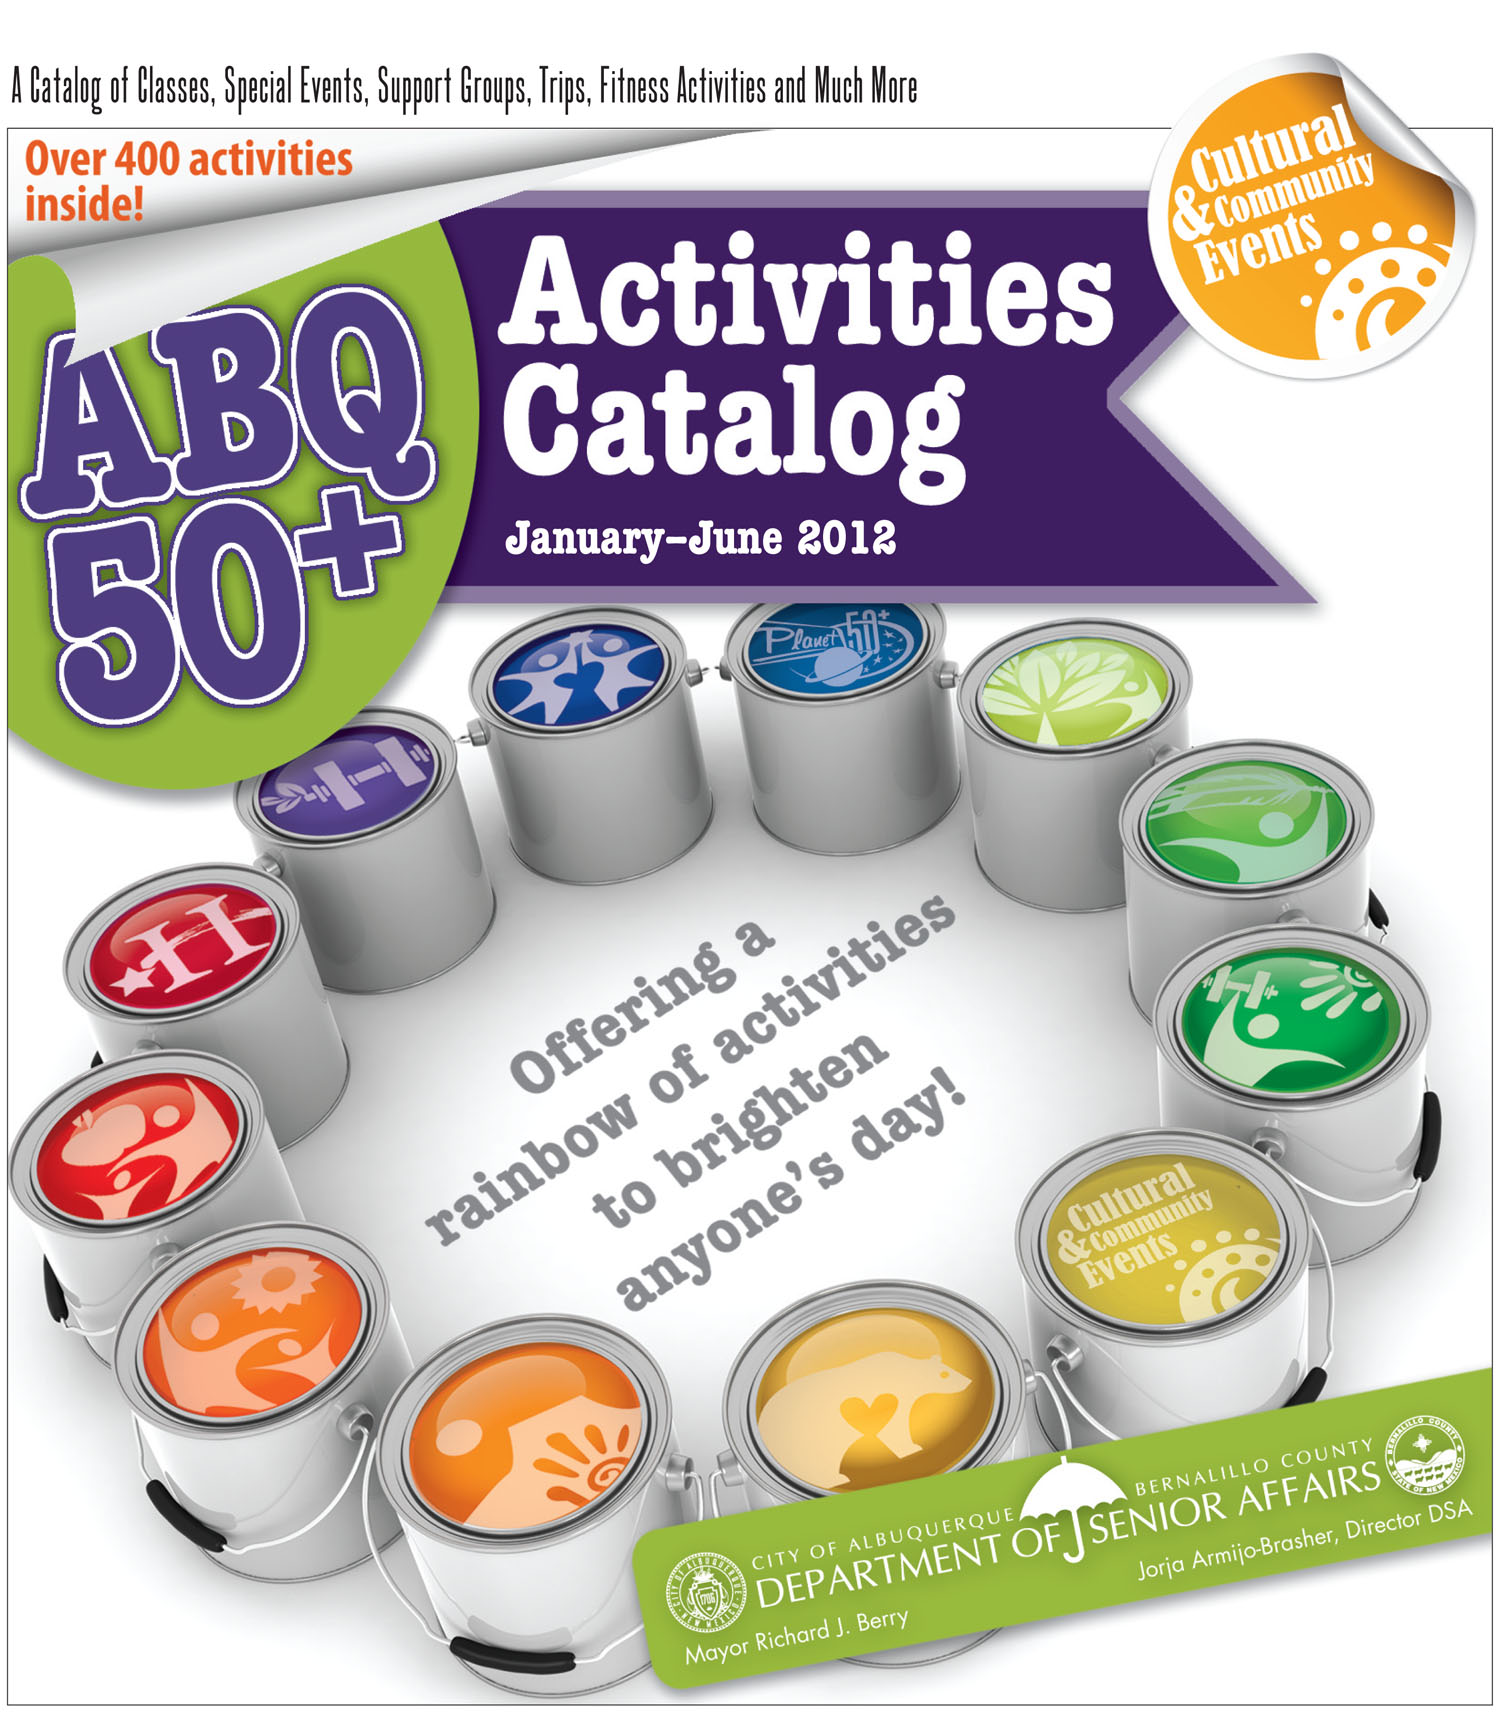 ABQ 50-Plus Activities Catalog Jan-Jun 2012 Cover